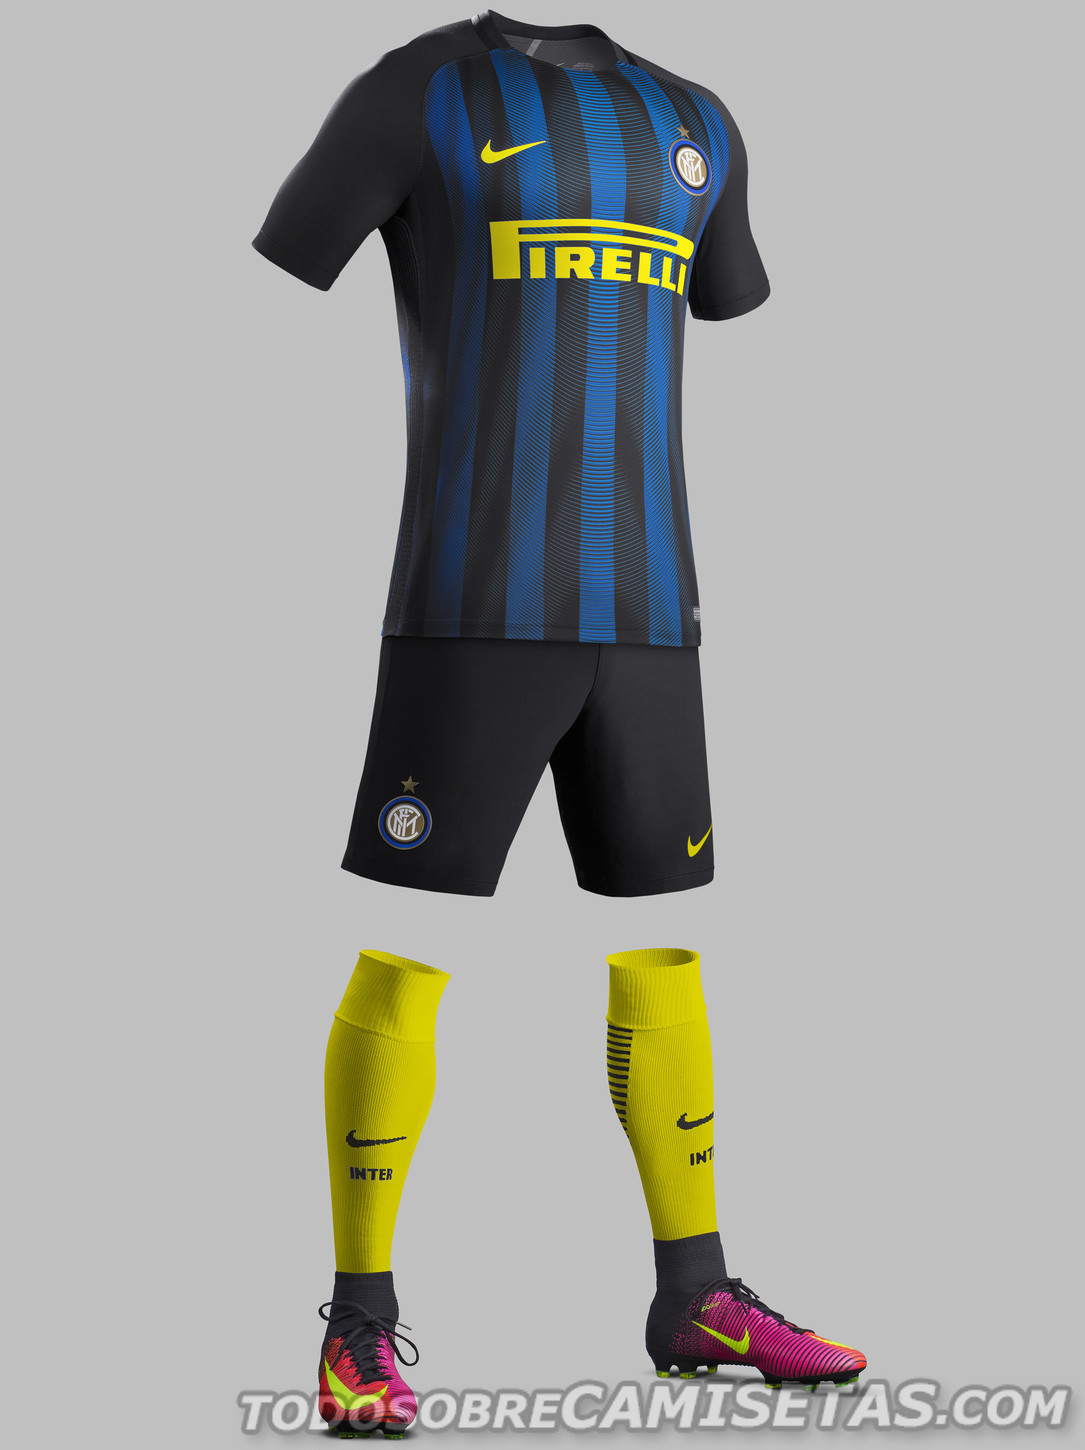 Inter-Milano-2016-17-NIKE-new-home-kit-9.jpg